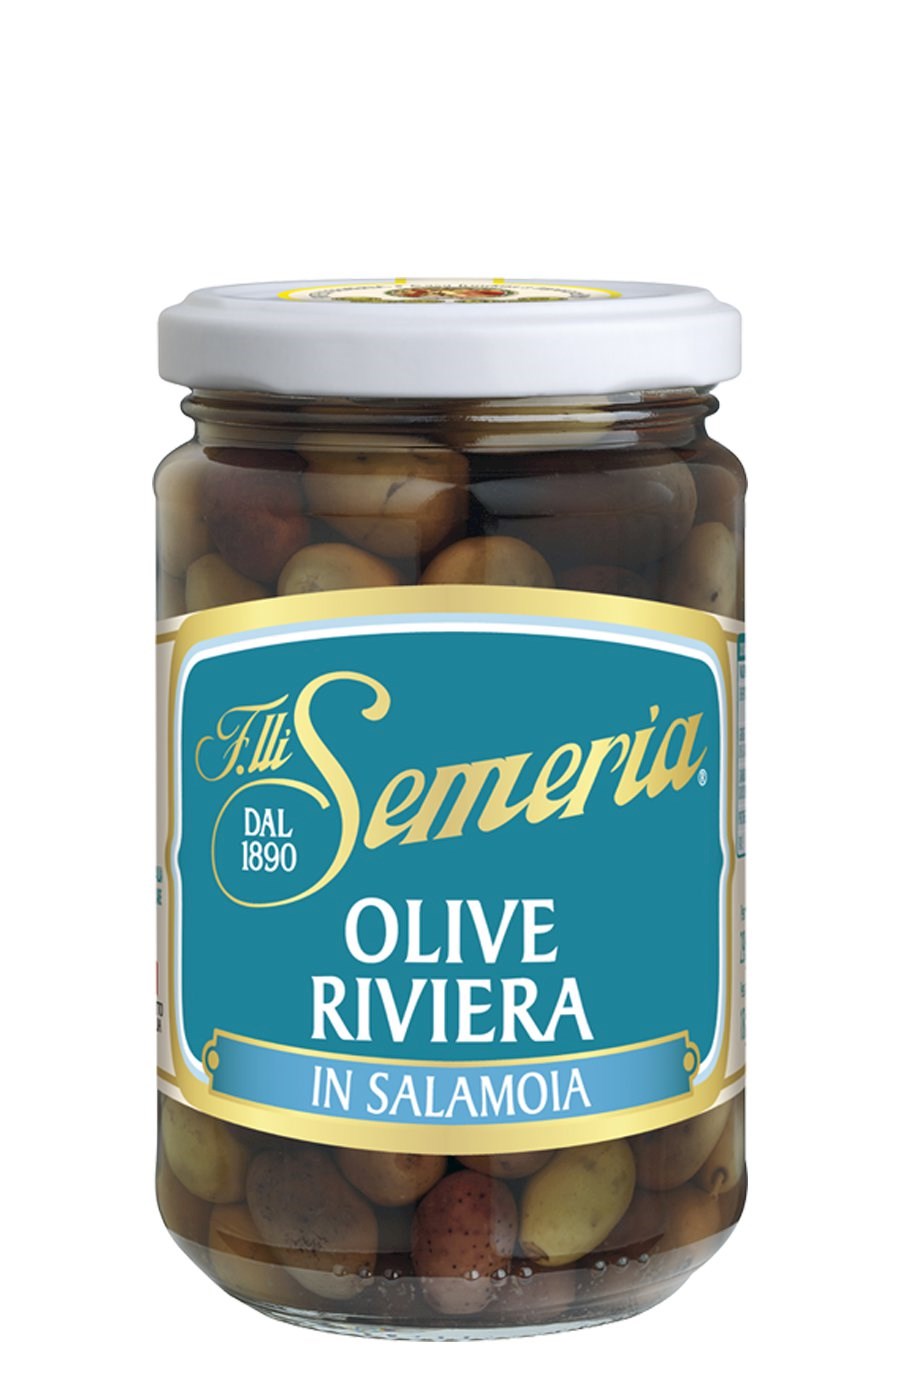 Olive Riviera in Salamoia